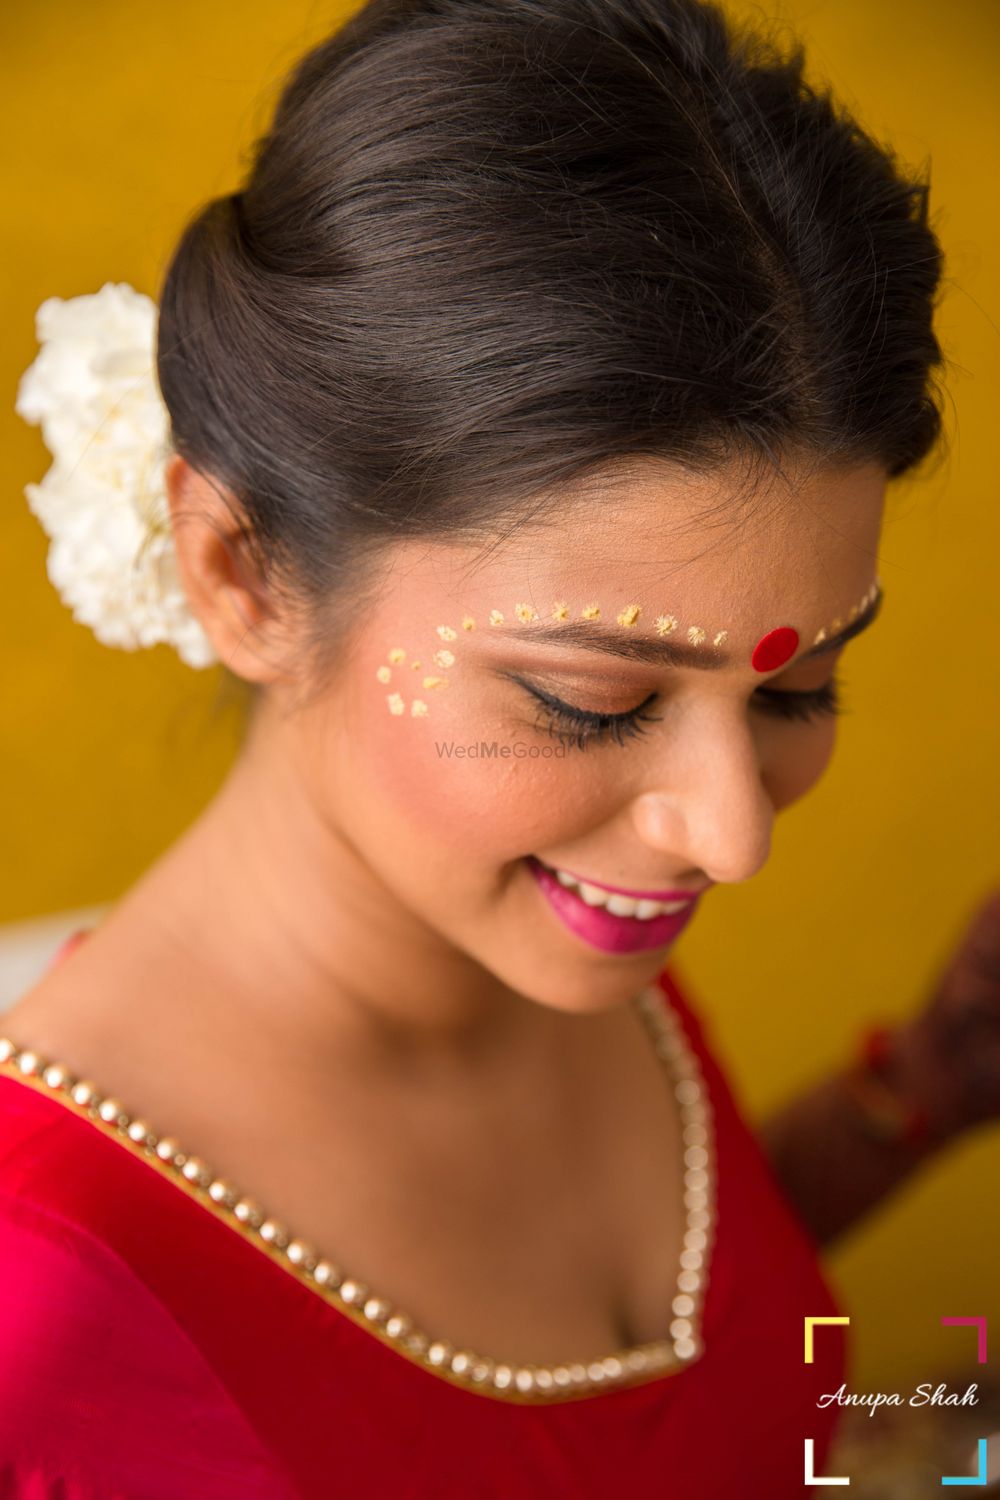 Photo From Bengali Wedding of Aditi & Vipul - By Anupa Shah Photography